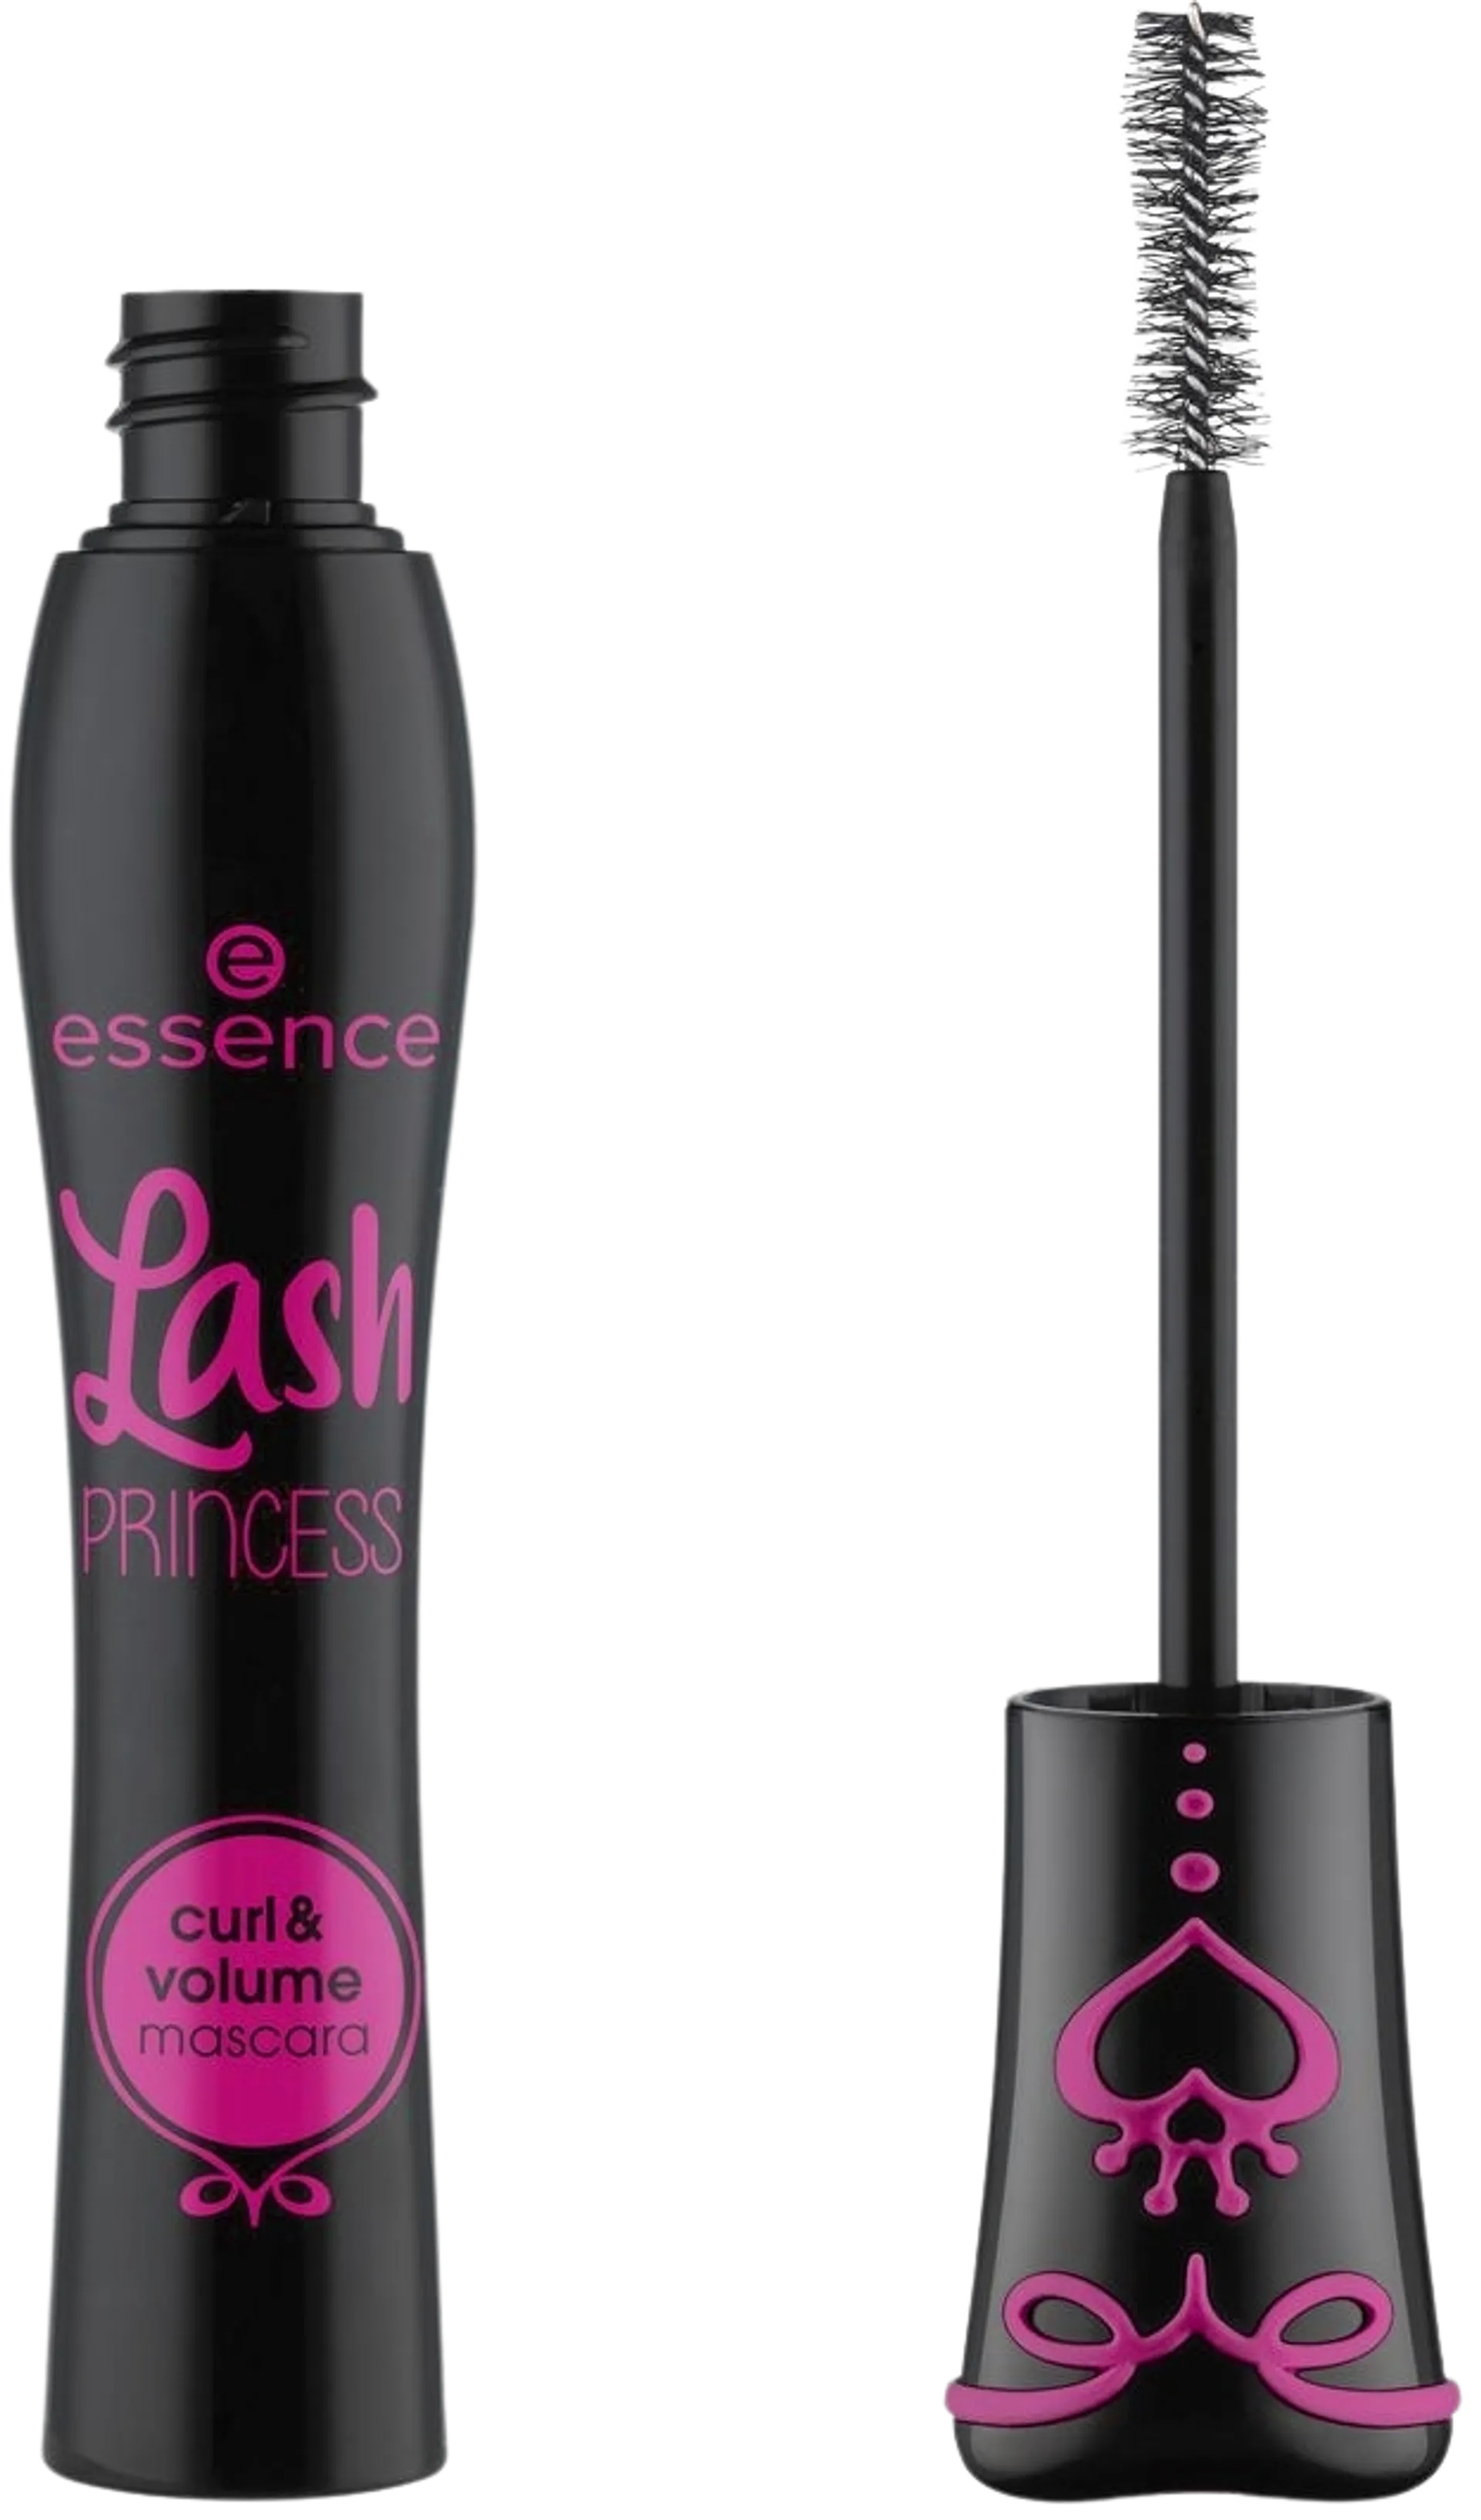 essence Lash PRINCESS curl & volume mascara 12 ml - 1